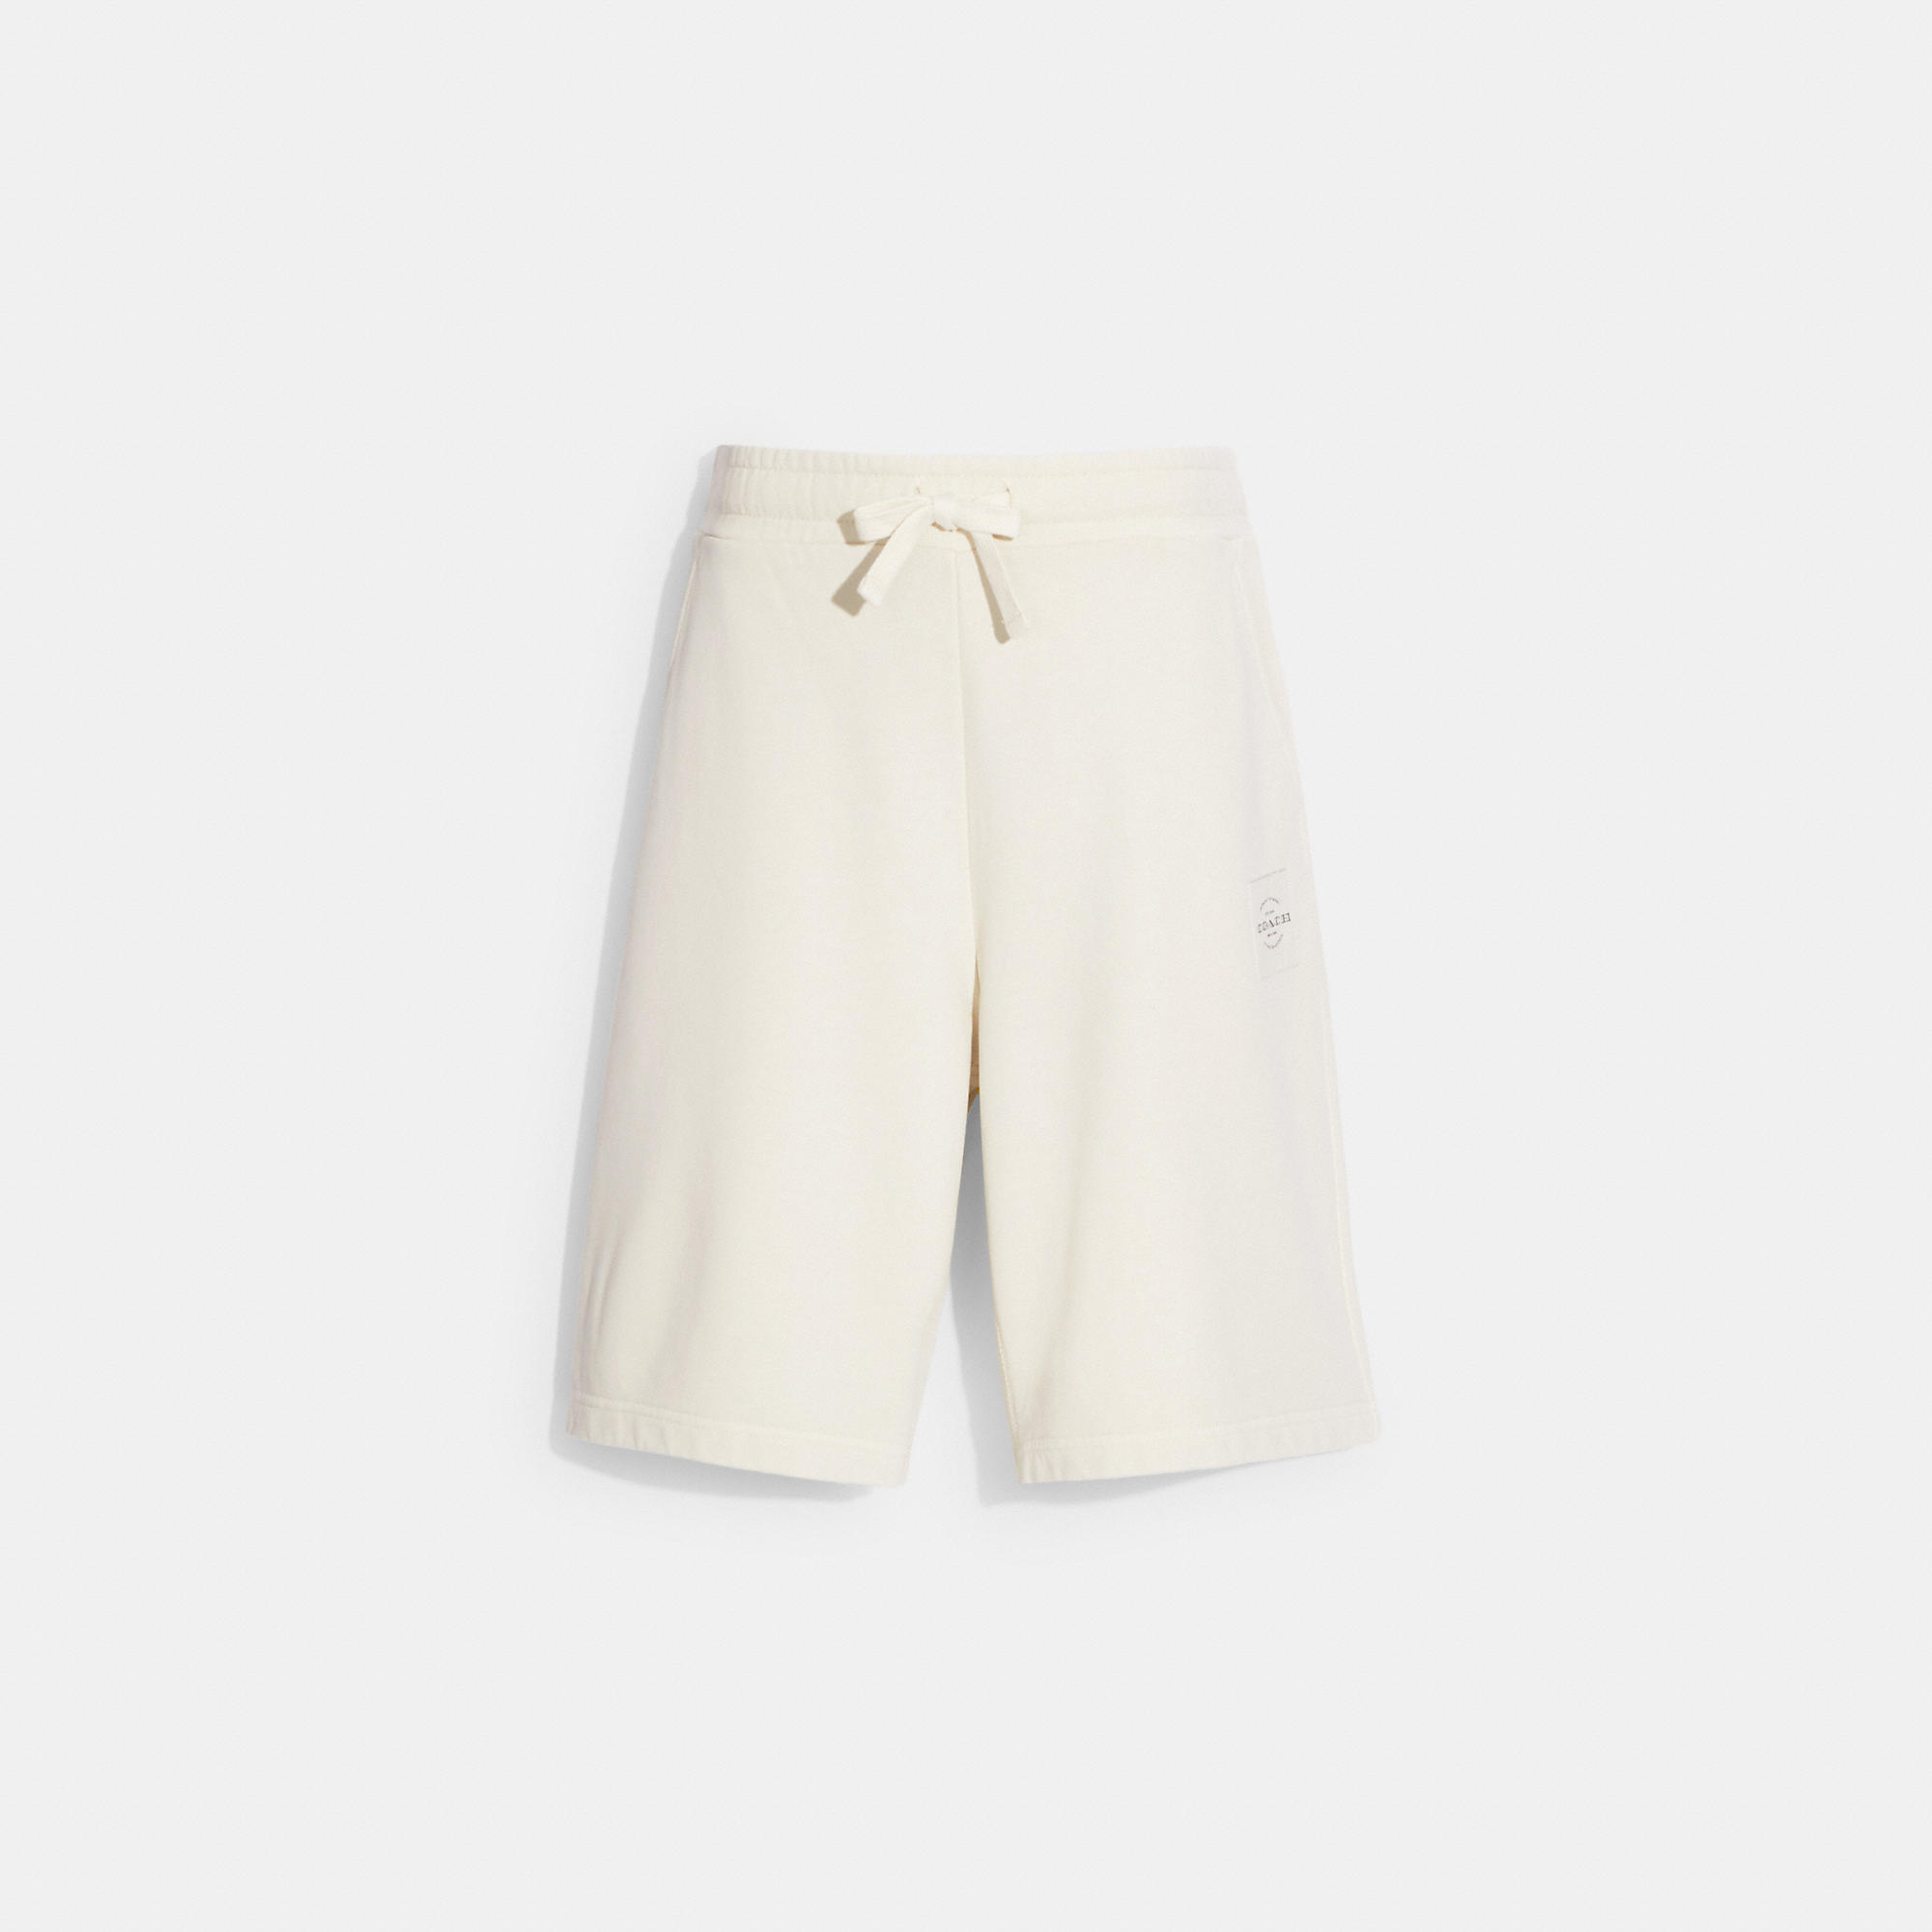 Coach Outlet Garment Dye Shorts In White